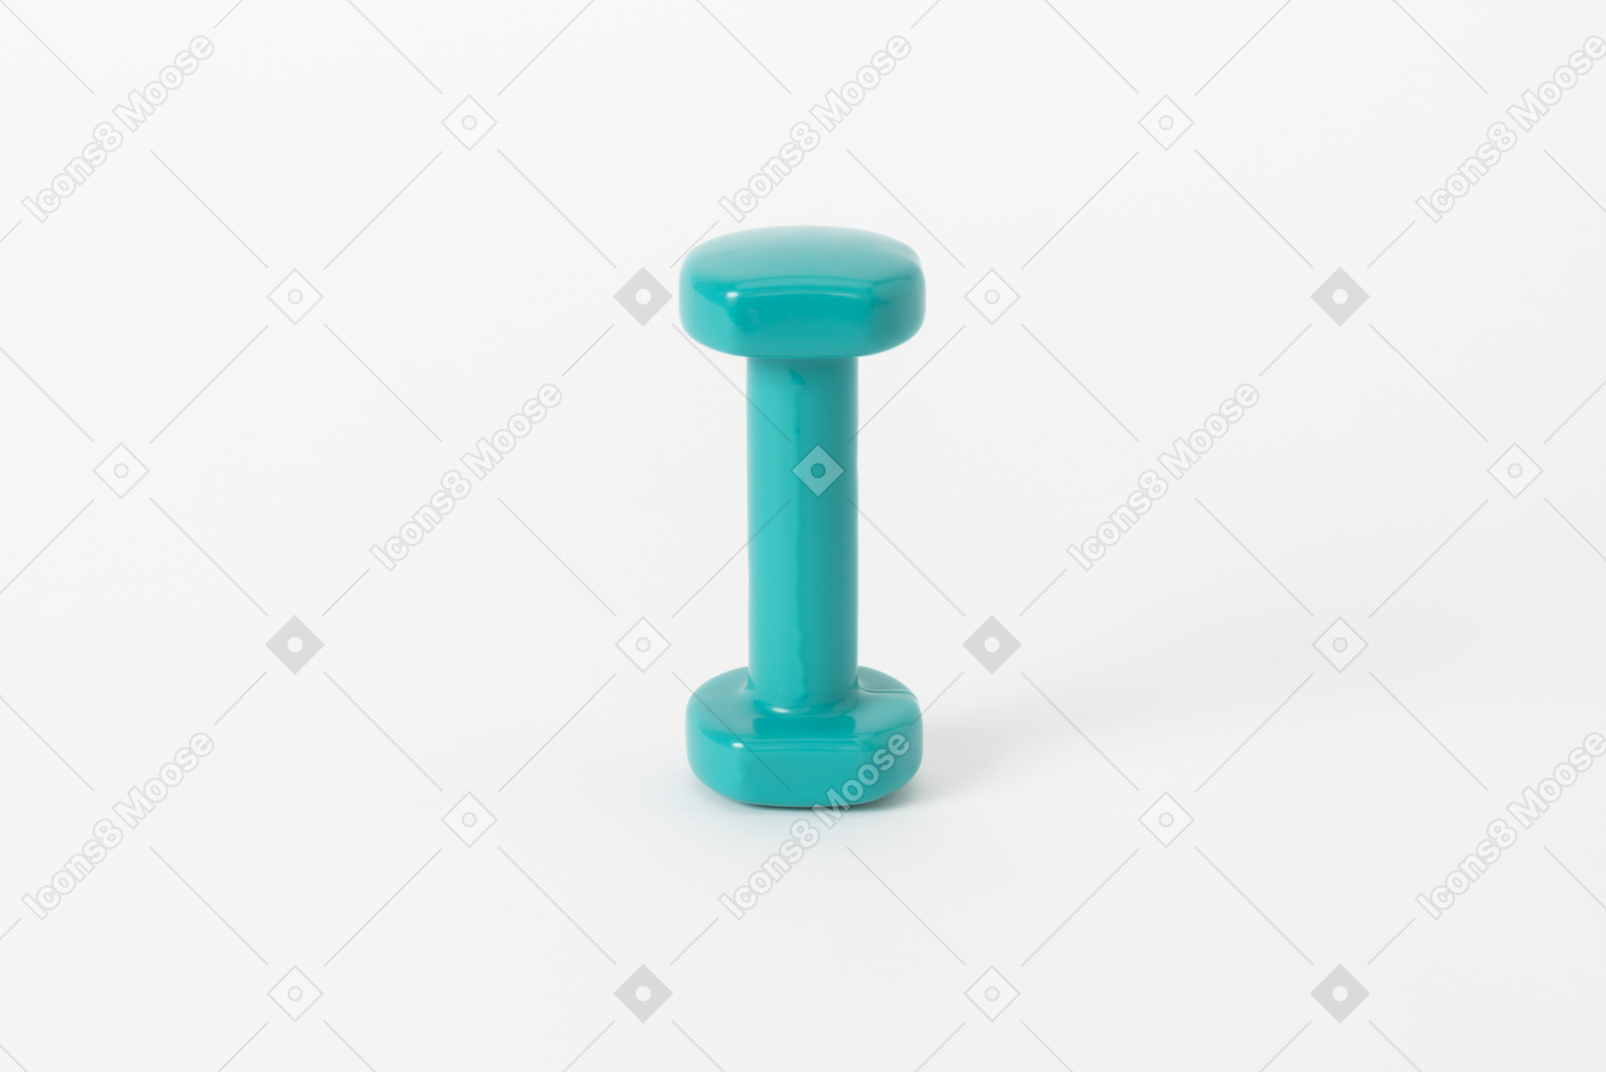 Plastic toy dumbbell